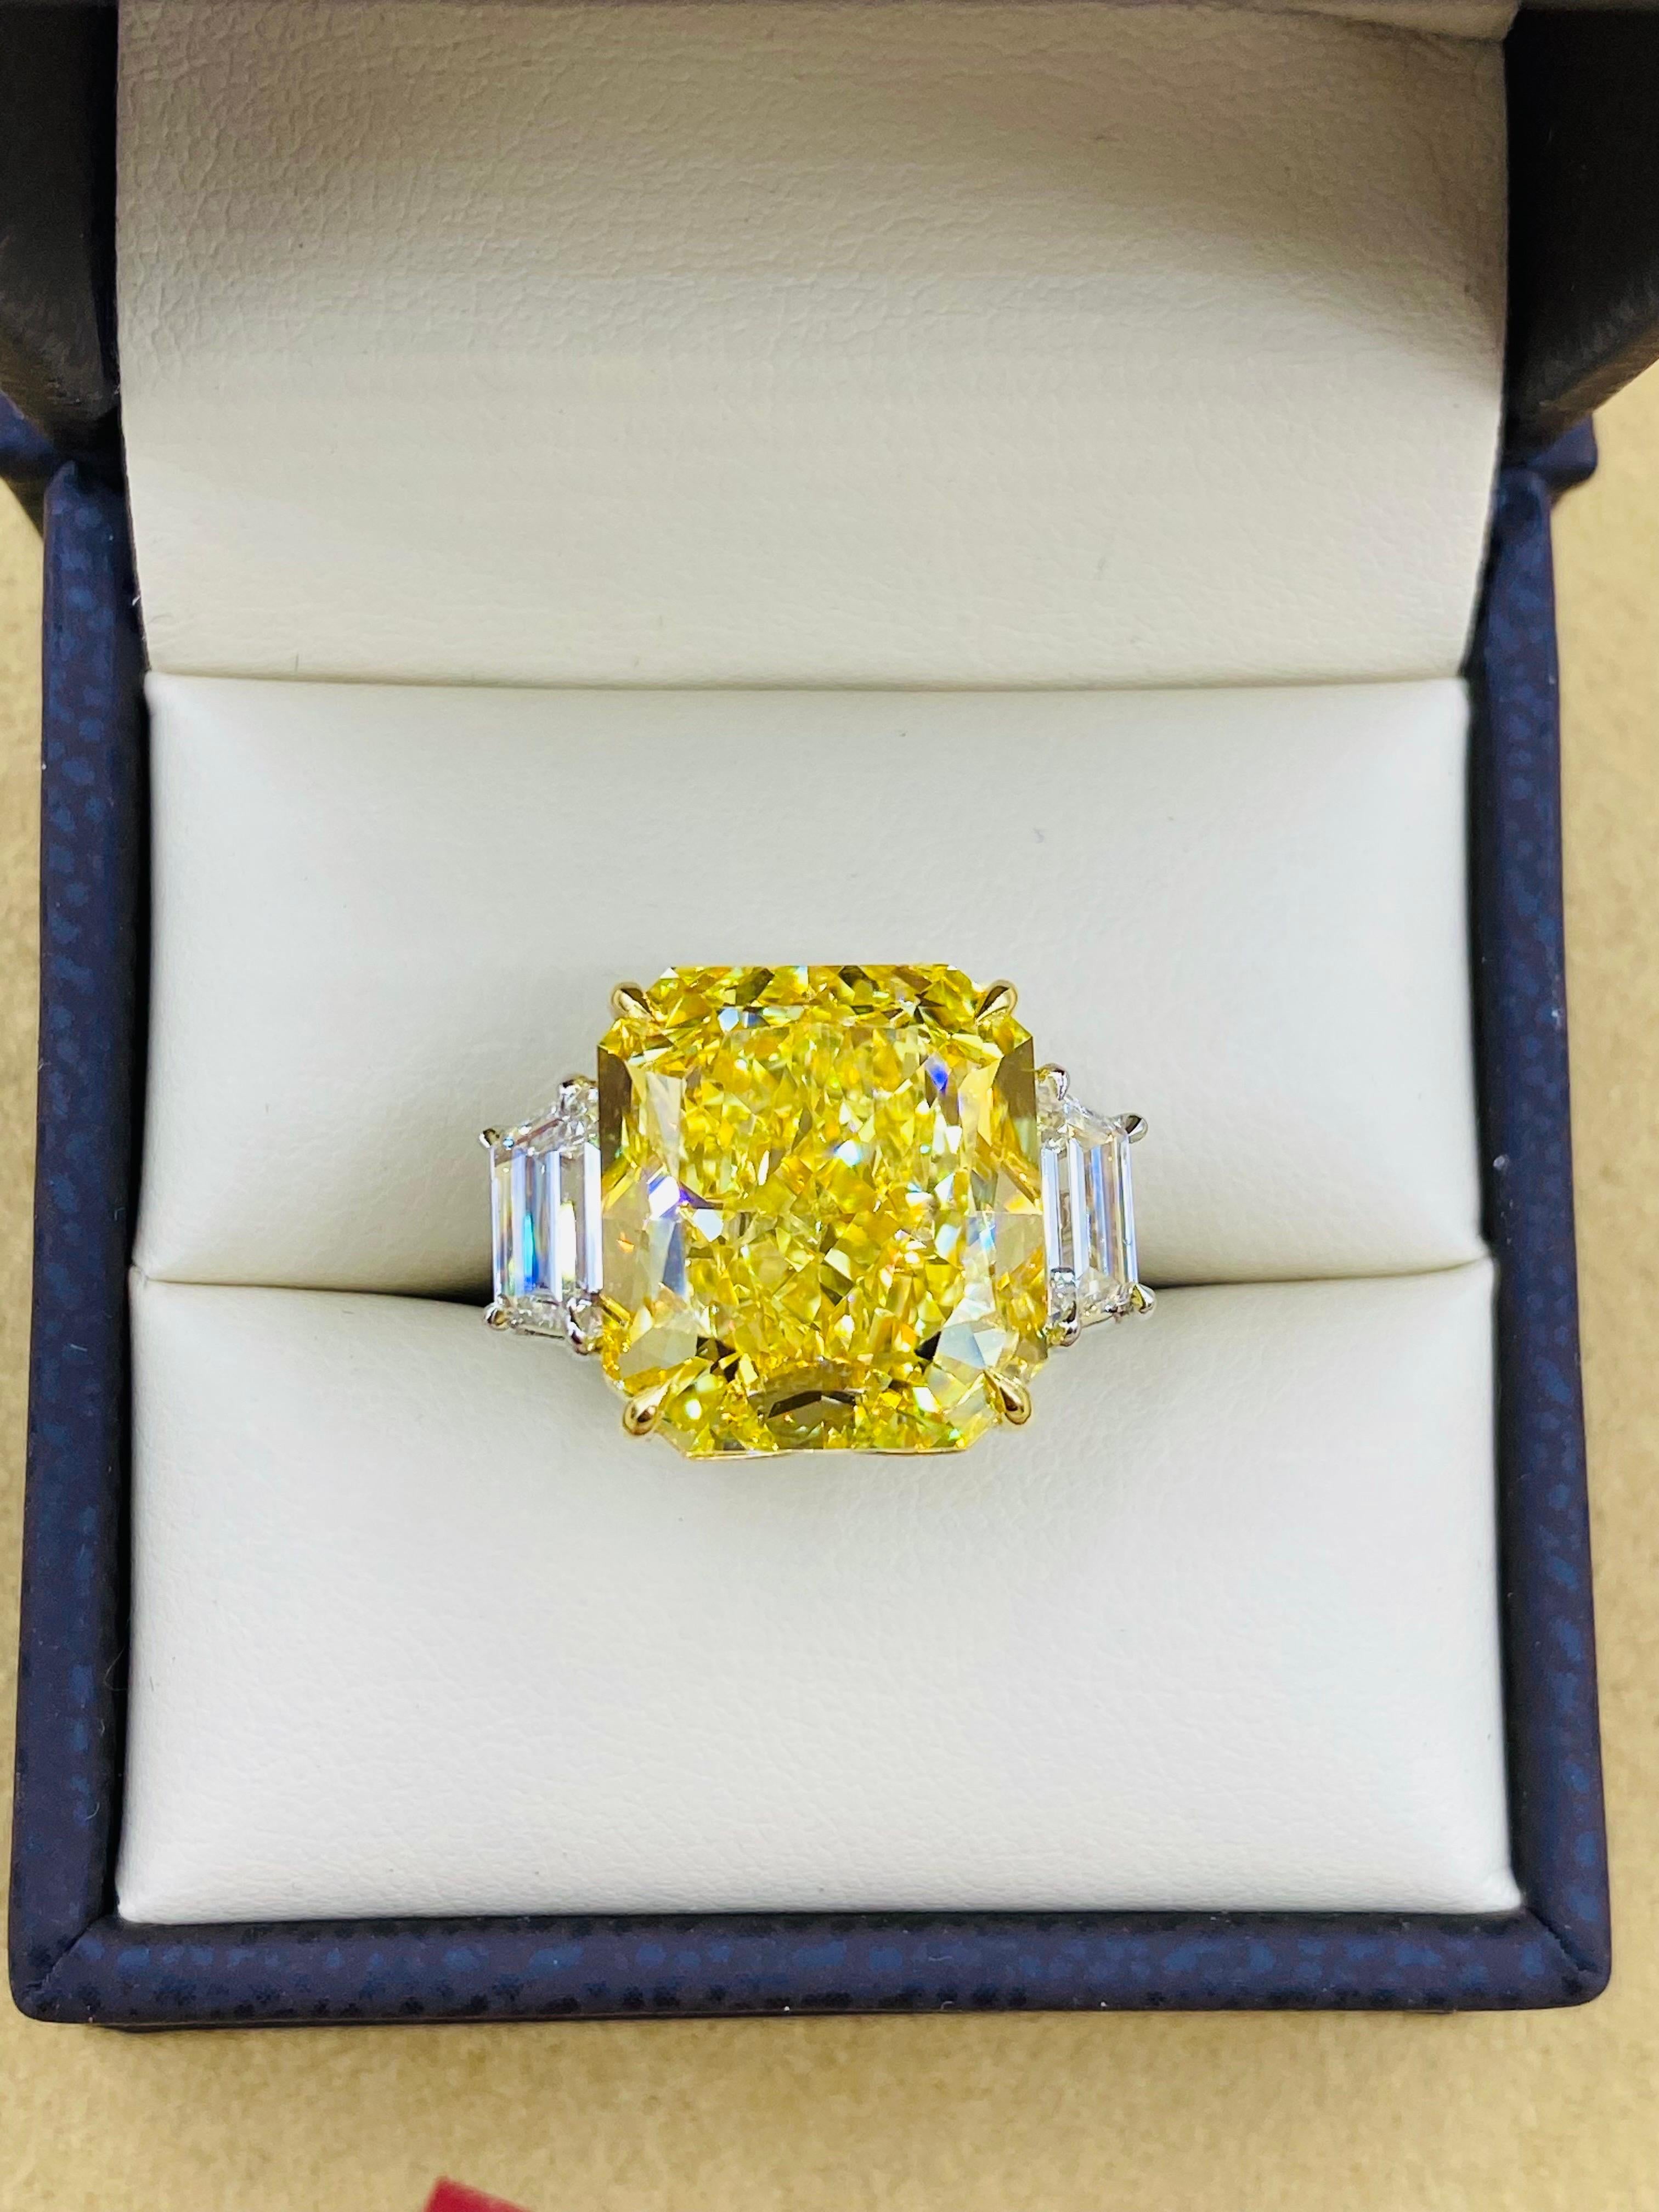 Radiant Cut Emilio Jewelry Gia Certified 15 Carat Fancy Intense Yellow Diamond Ring  For Sale